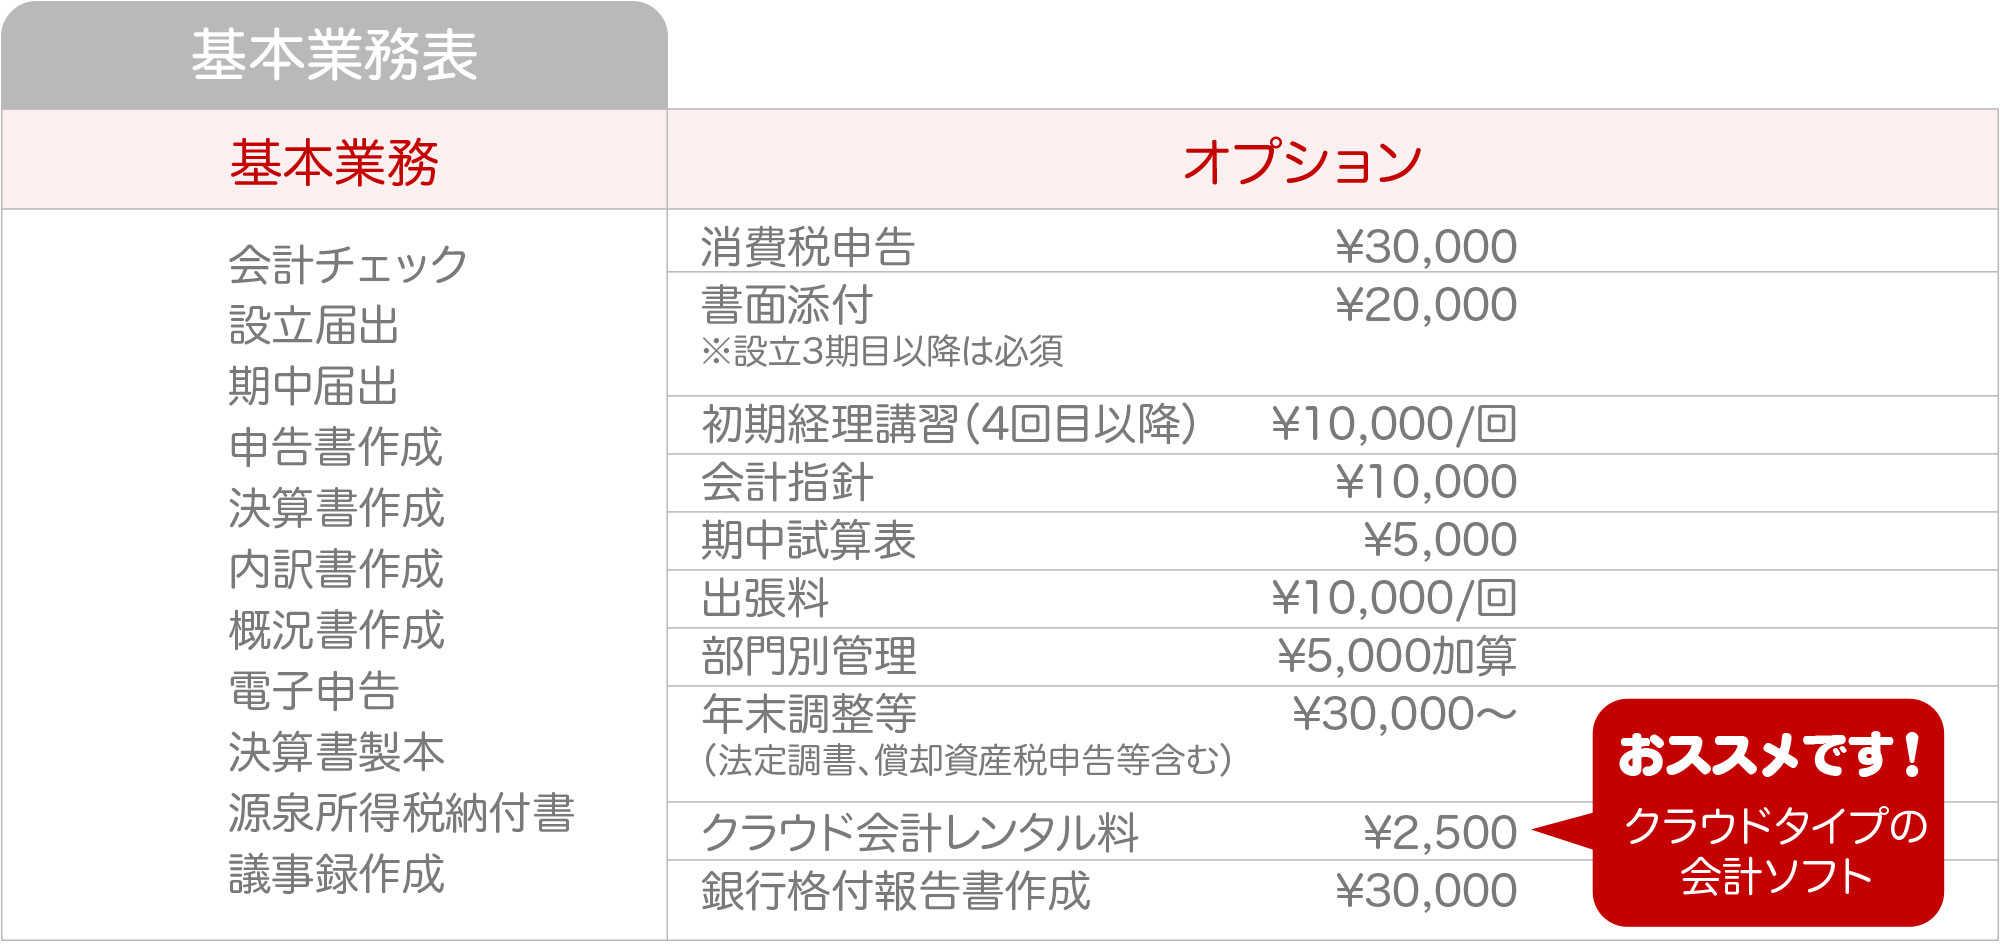 浅野会計事務所の金額・料金案内Fプラン基本業務表